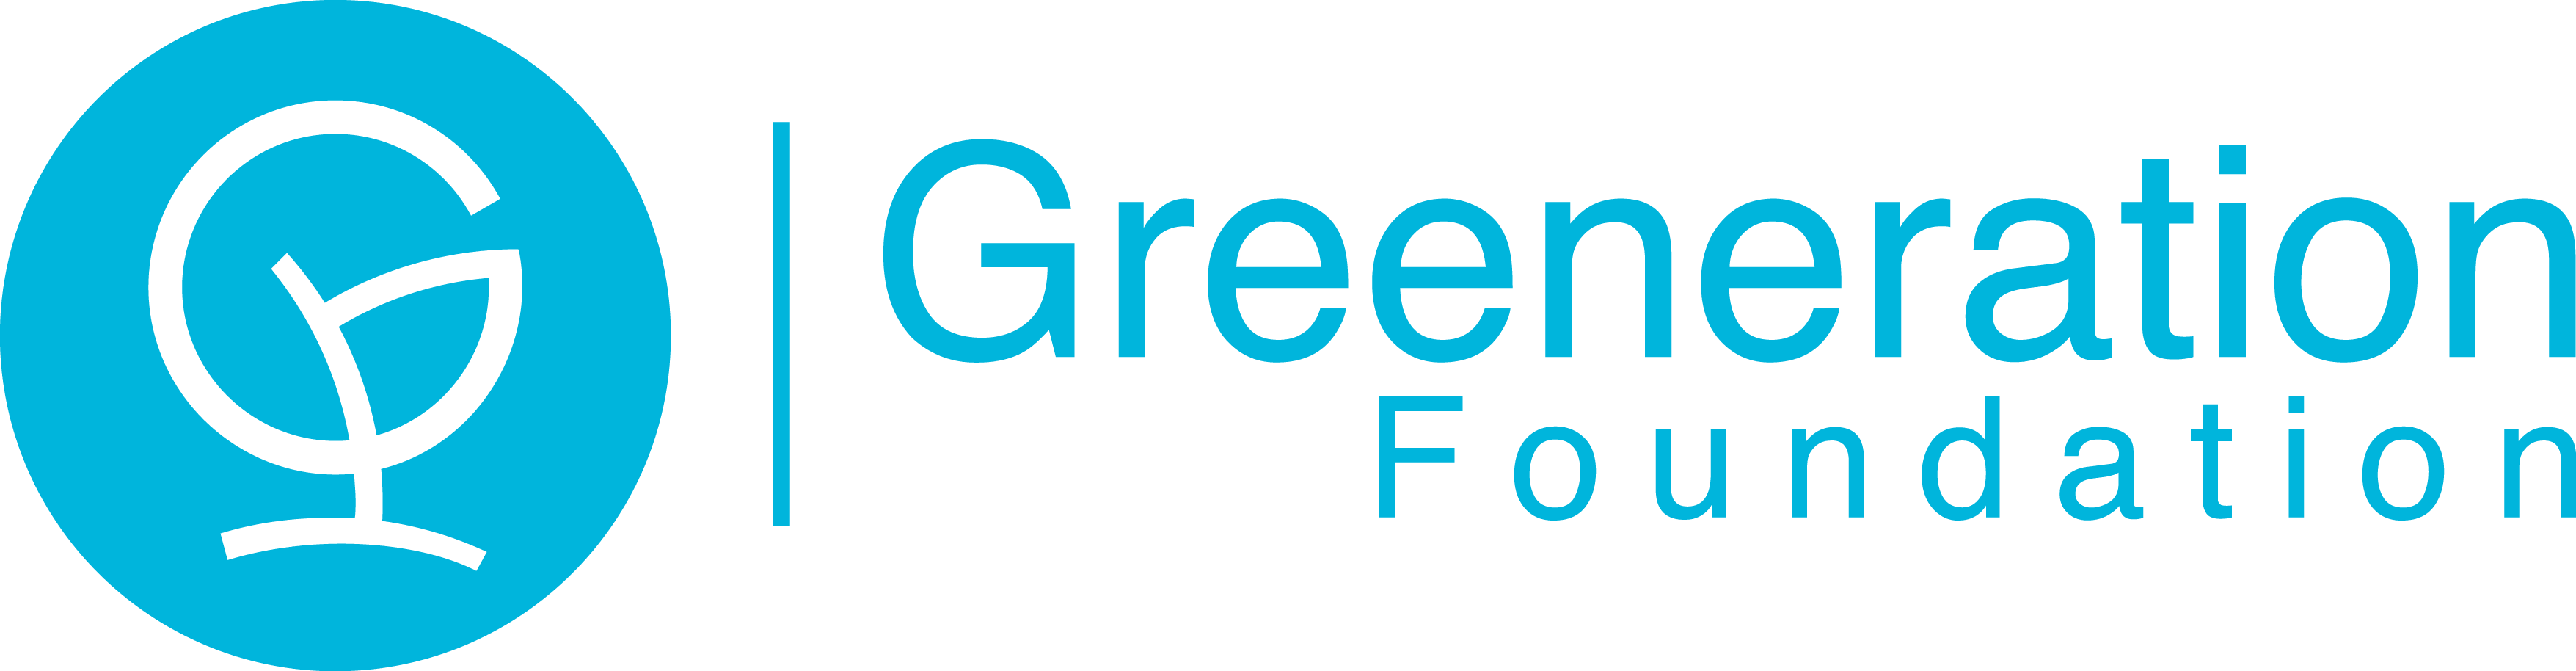 Greeneration Foundation